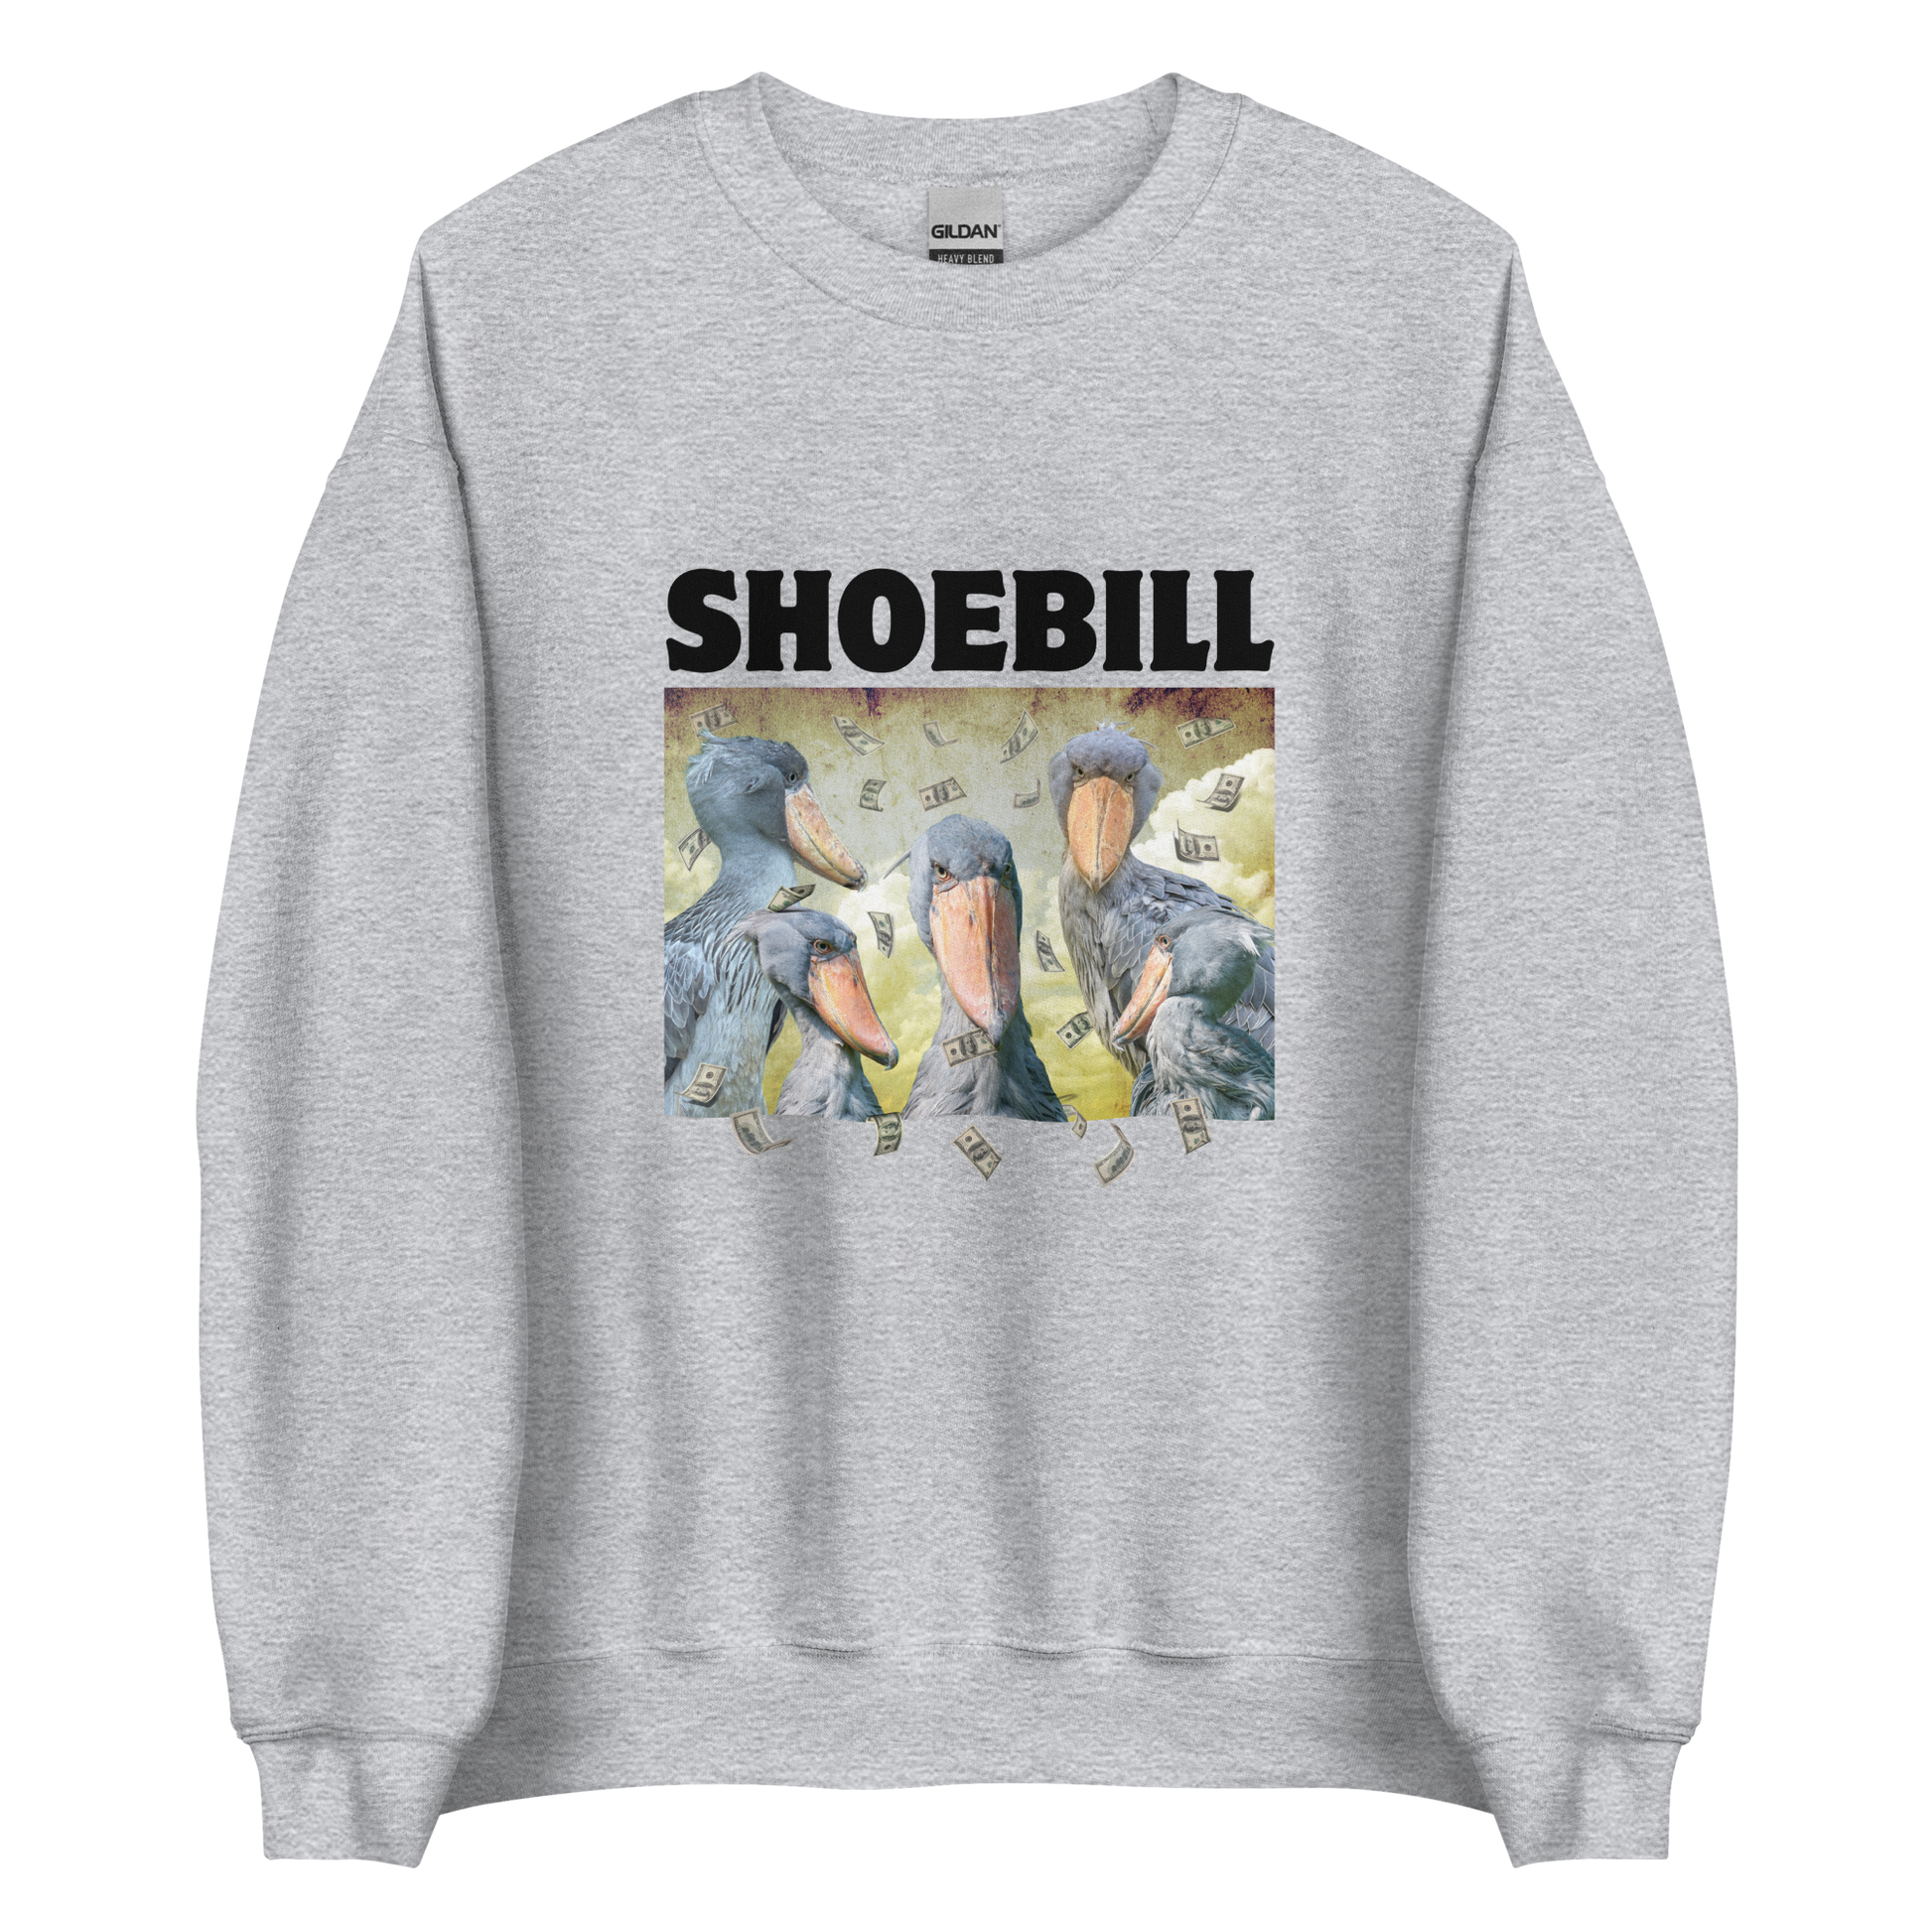 Sport Grey Shoebill Sweatshirt featuring a cool Shoebill graphic on the chest - Artsy/Funny Graphic Shoebill Stork Sweatshirts - Boozy Fox